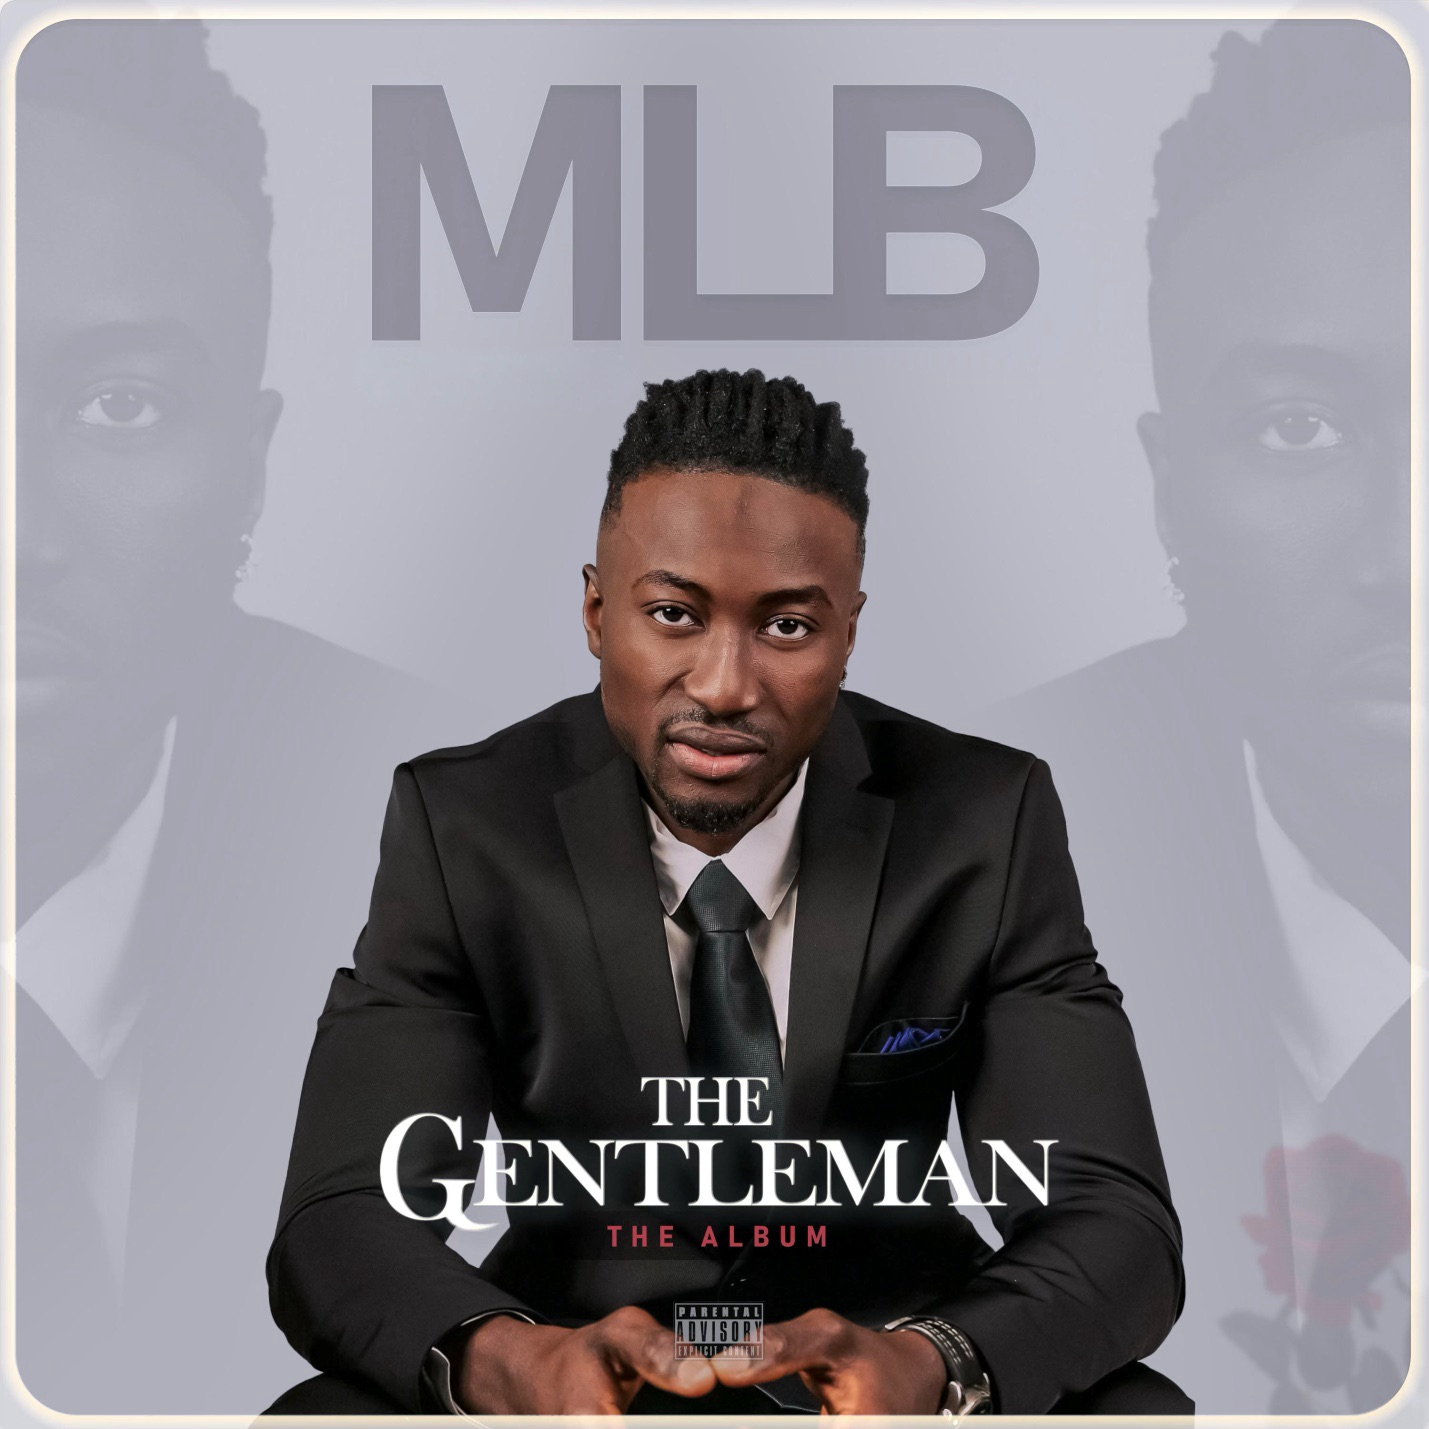 MLB’S ‘The Gentleman album Hits Digital Platforms